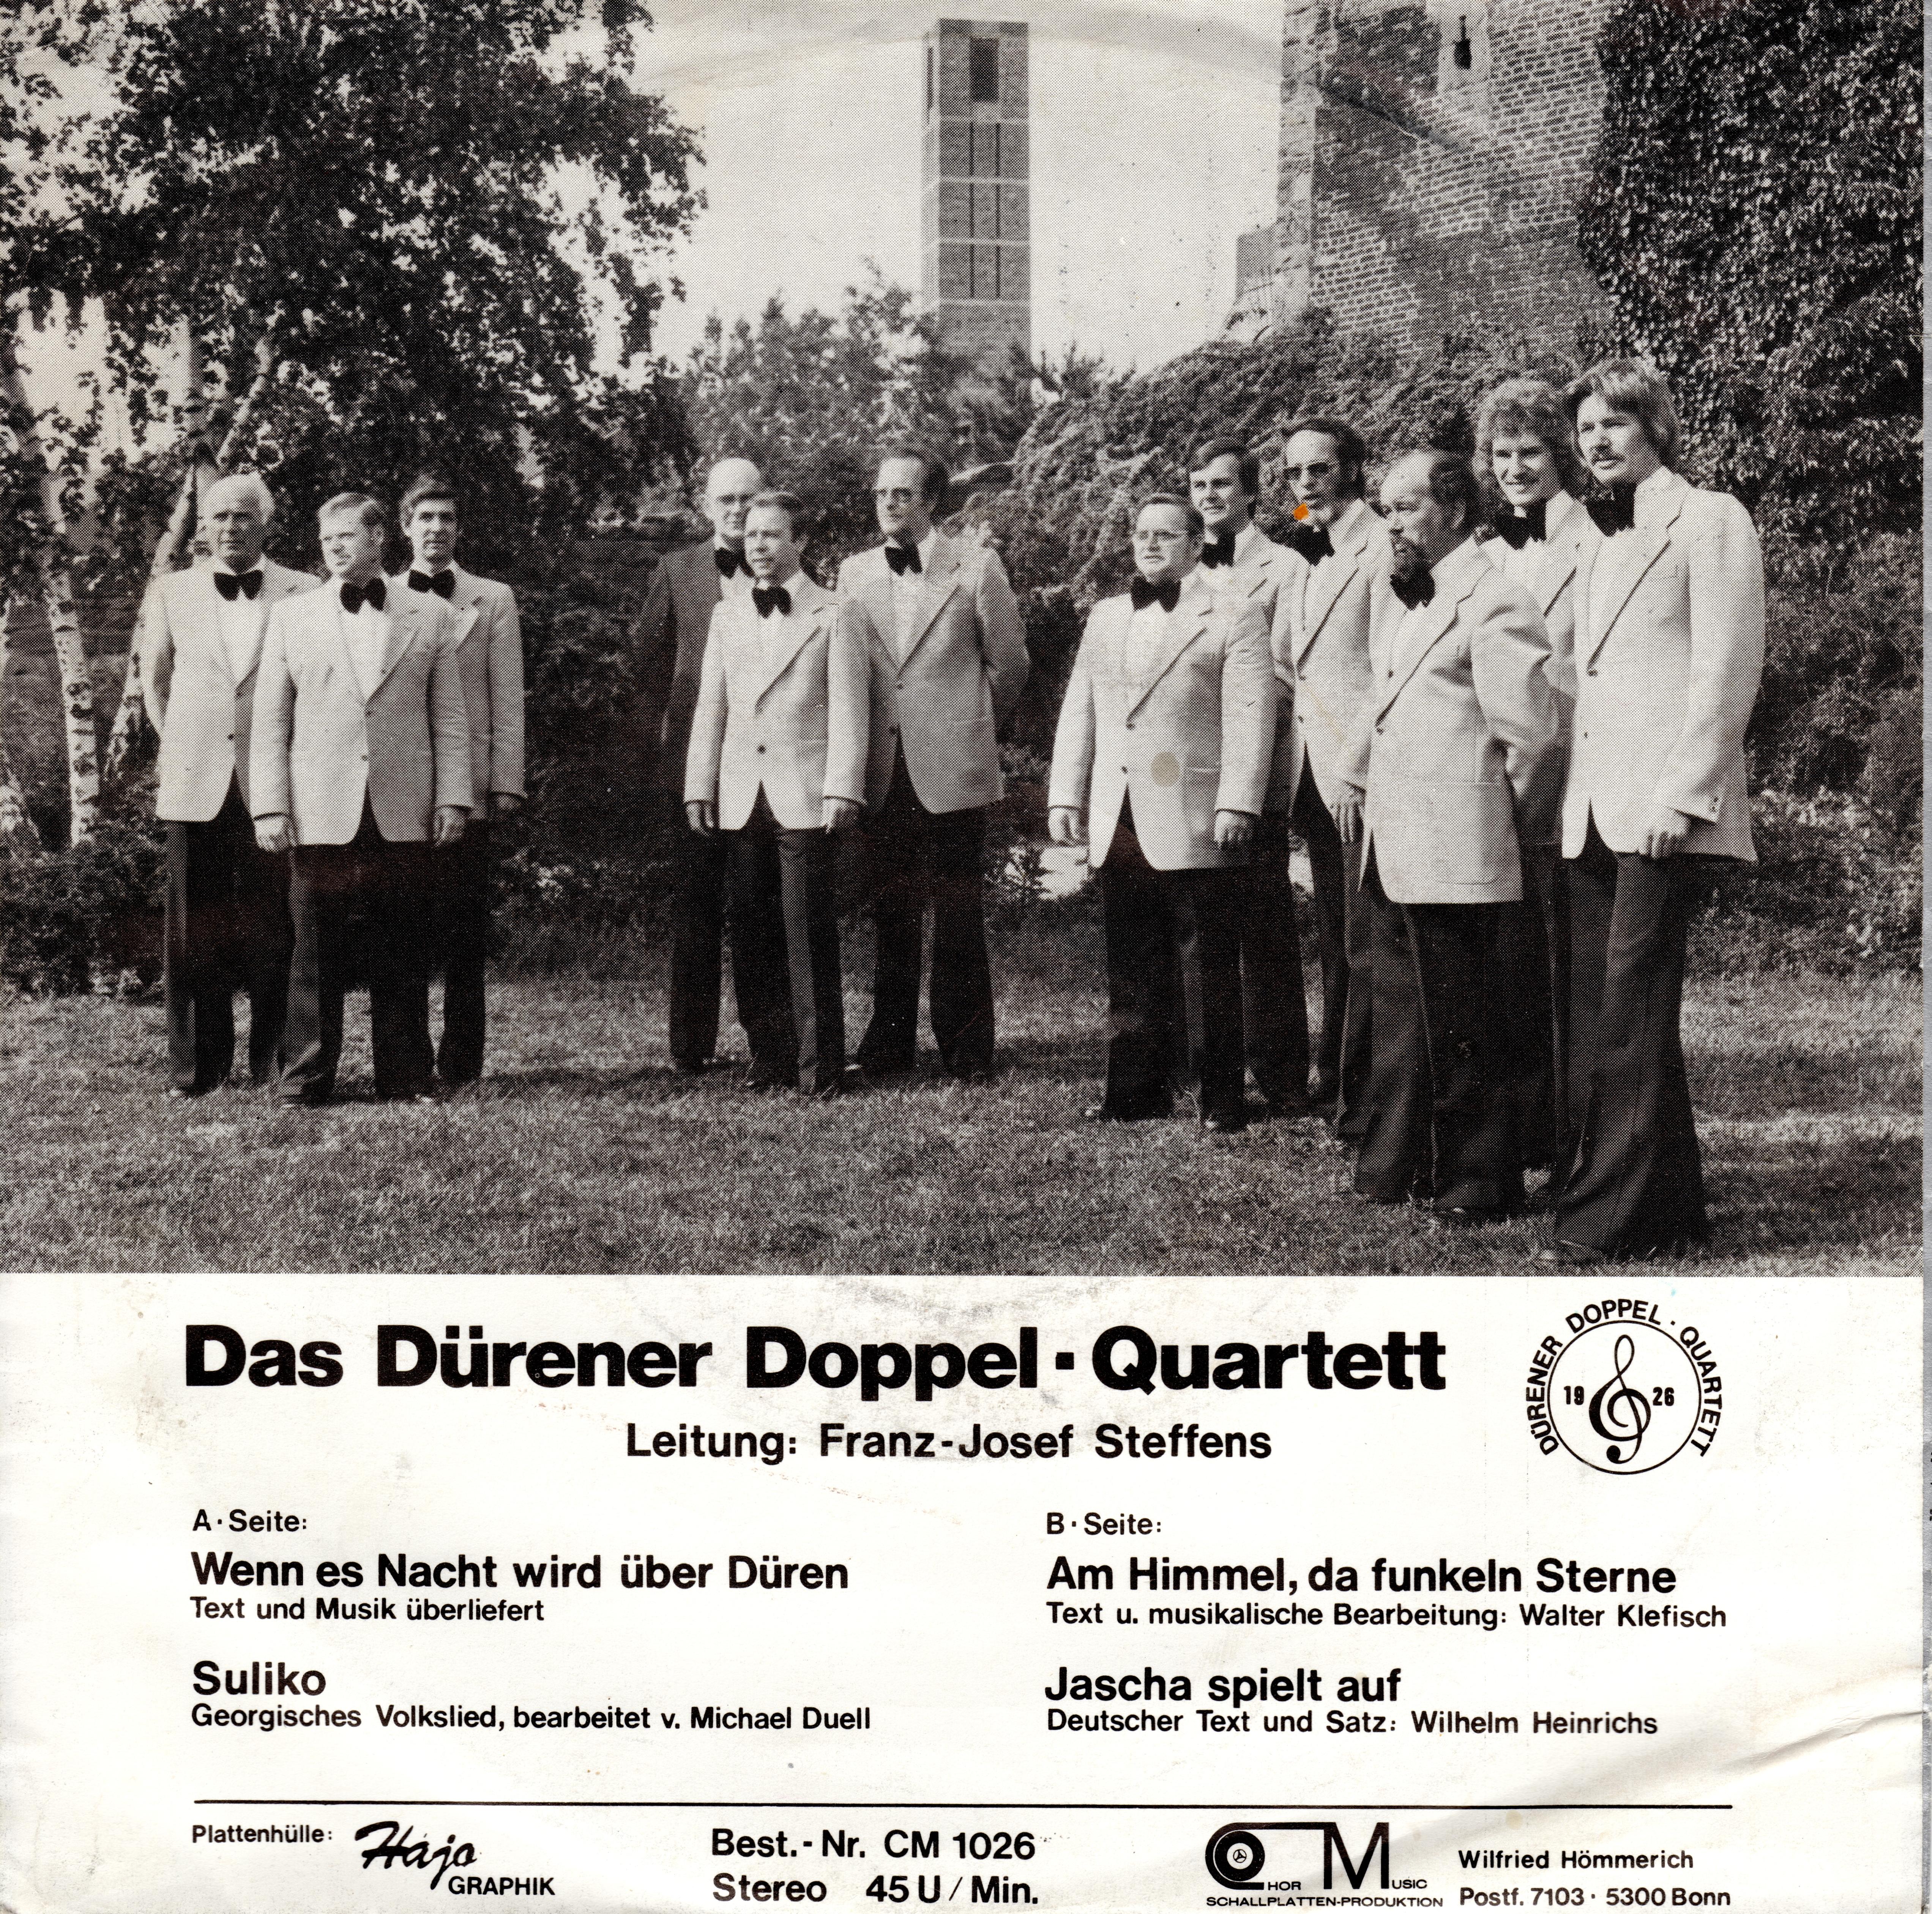 Schallplatte "Dat ahle Düre"
Cover - Rückseite